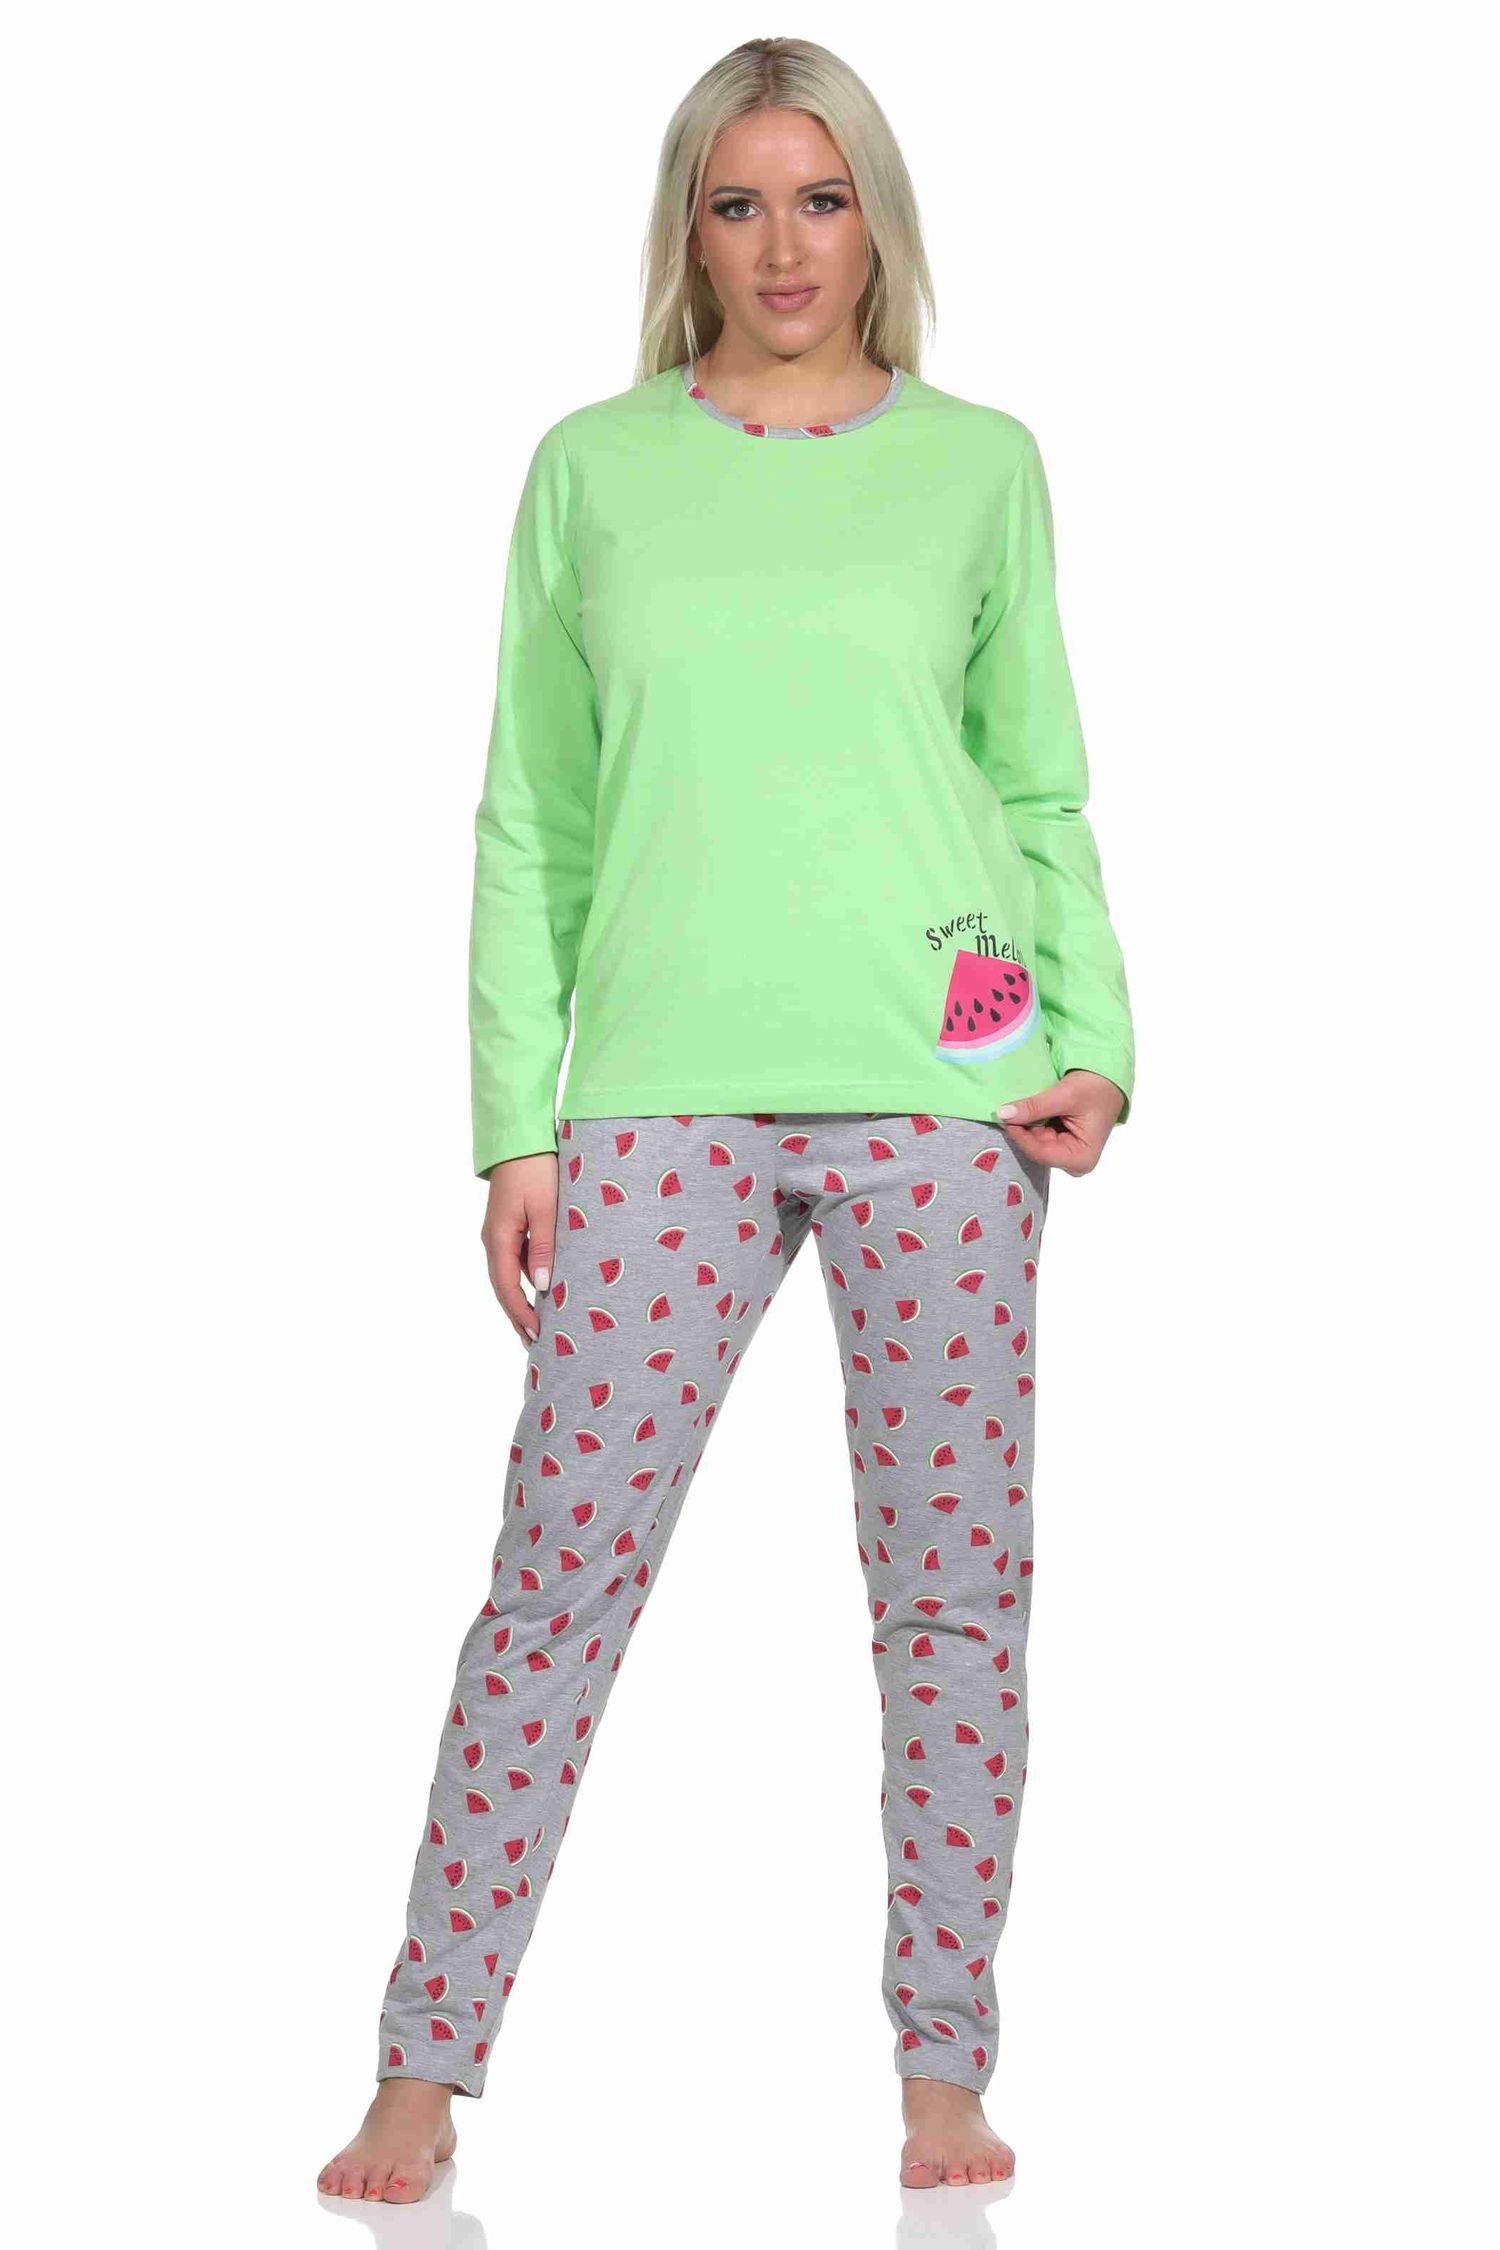 Normann Pyjama Damen Schlafanzug lang mit Melone als Motiv, Hose allover bedruckt grün